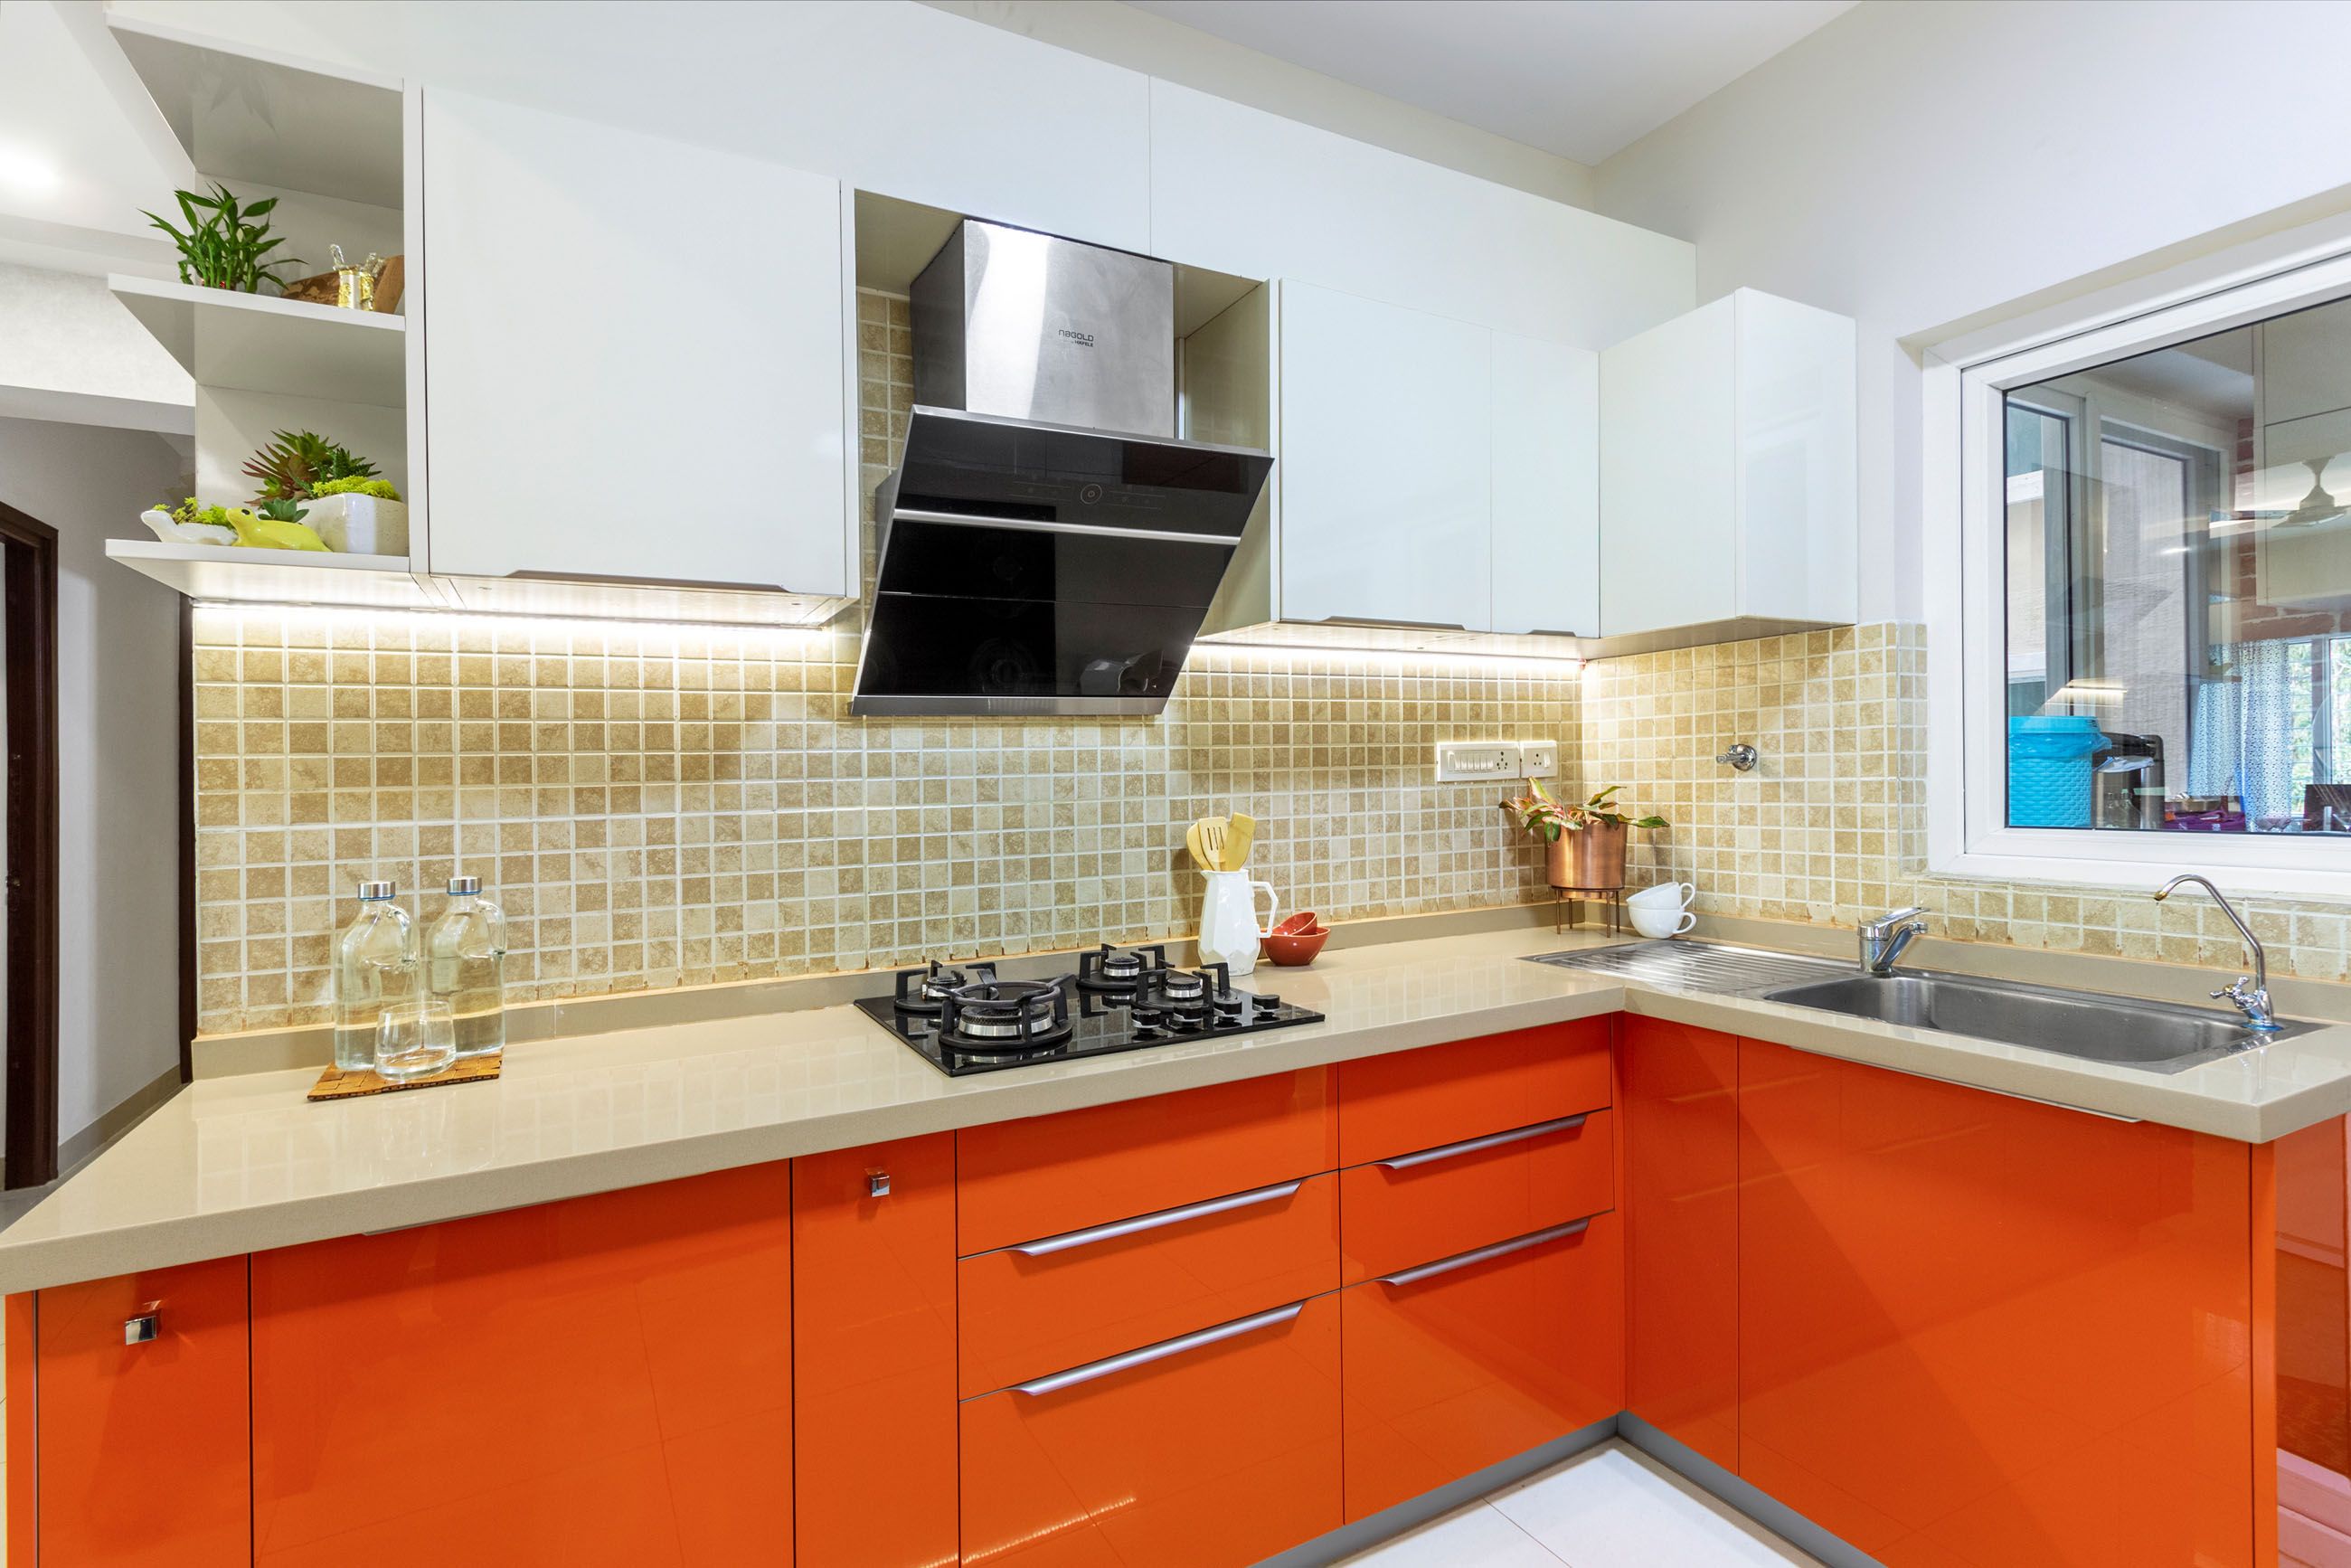 Modern Modular Indian Kitchen Design In Orange And White